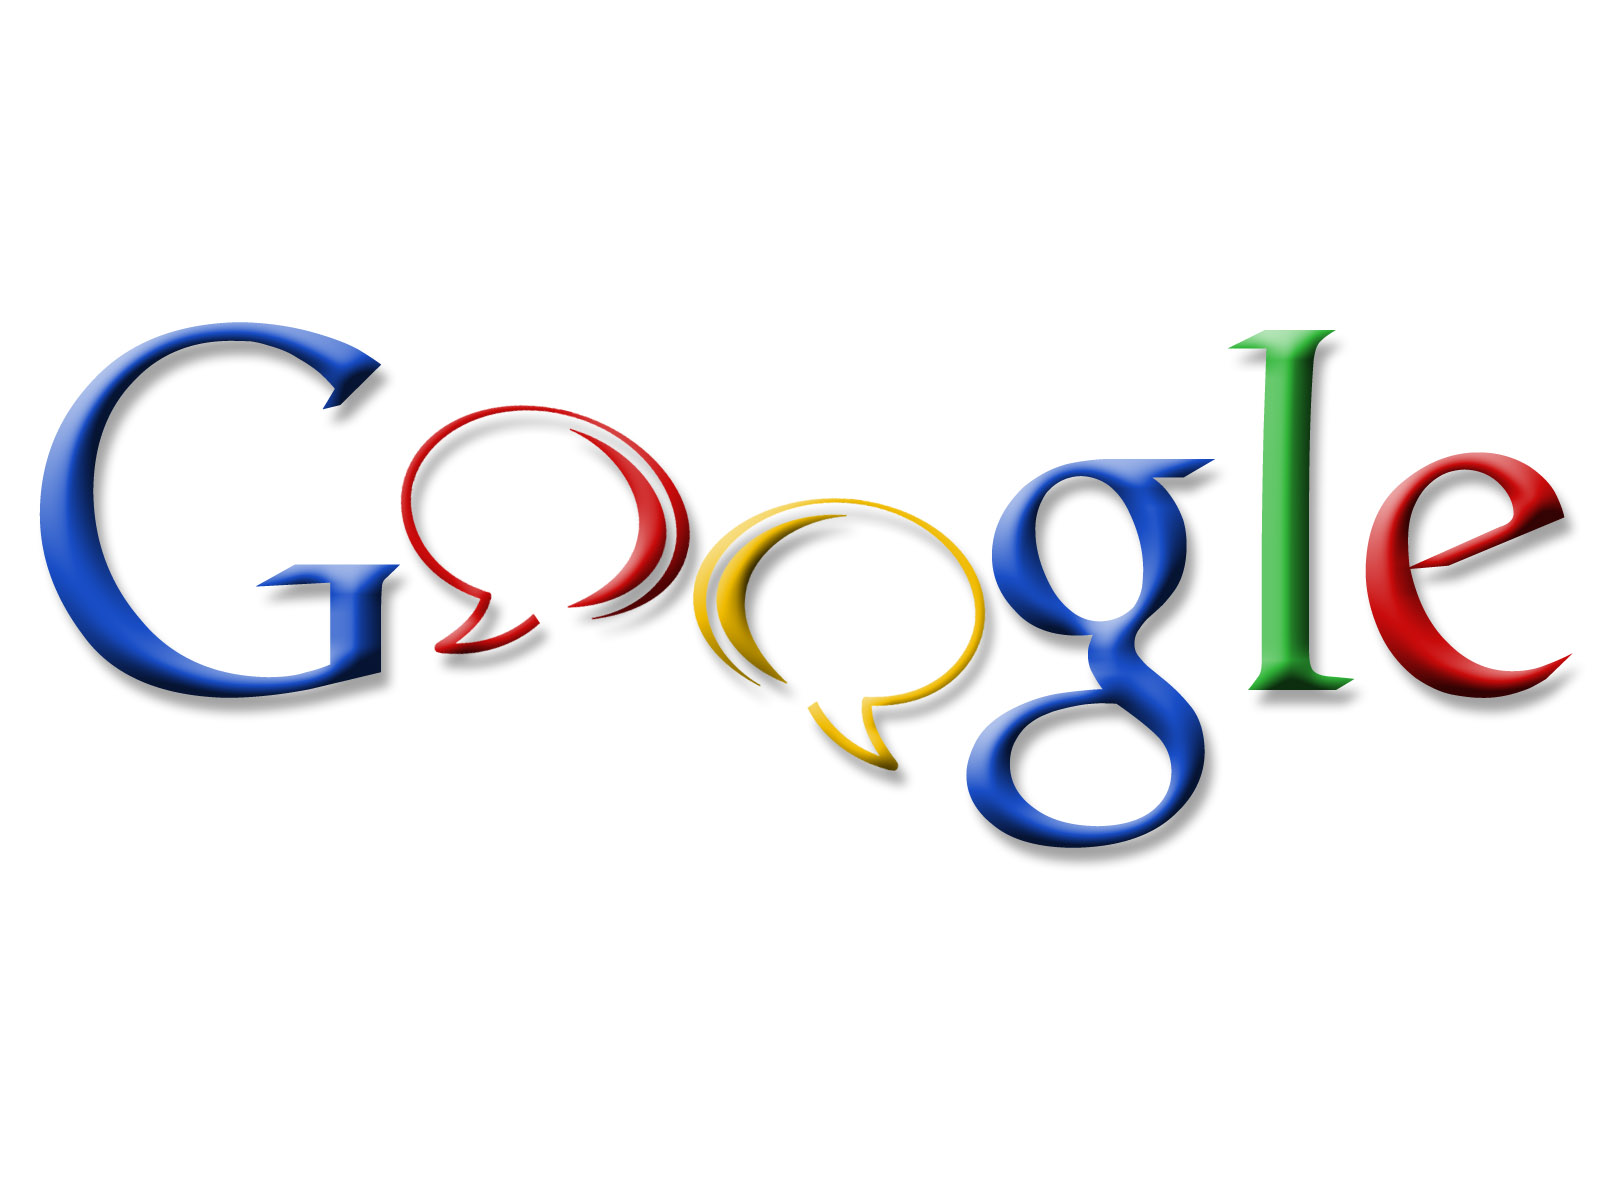 Гугл. Логотип компании гугл. Гугл без фона.